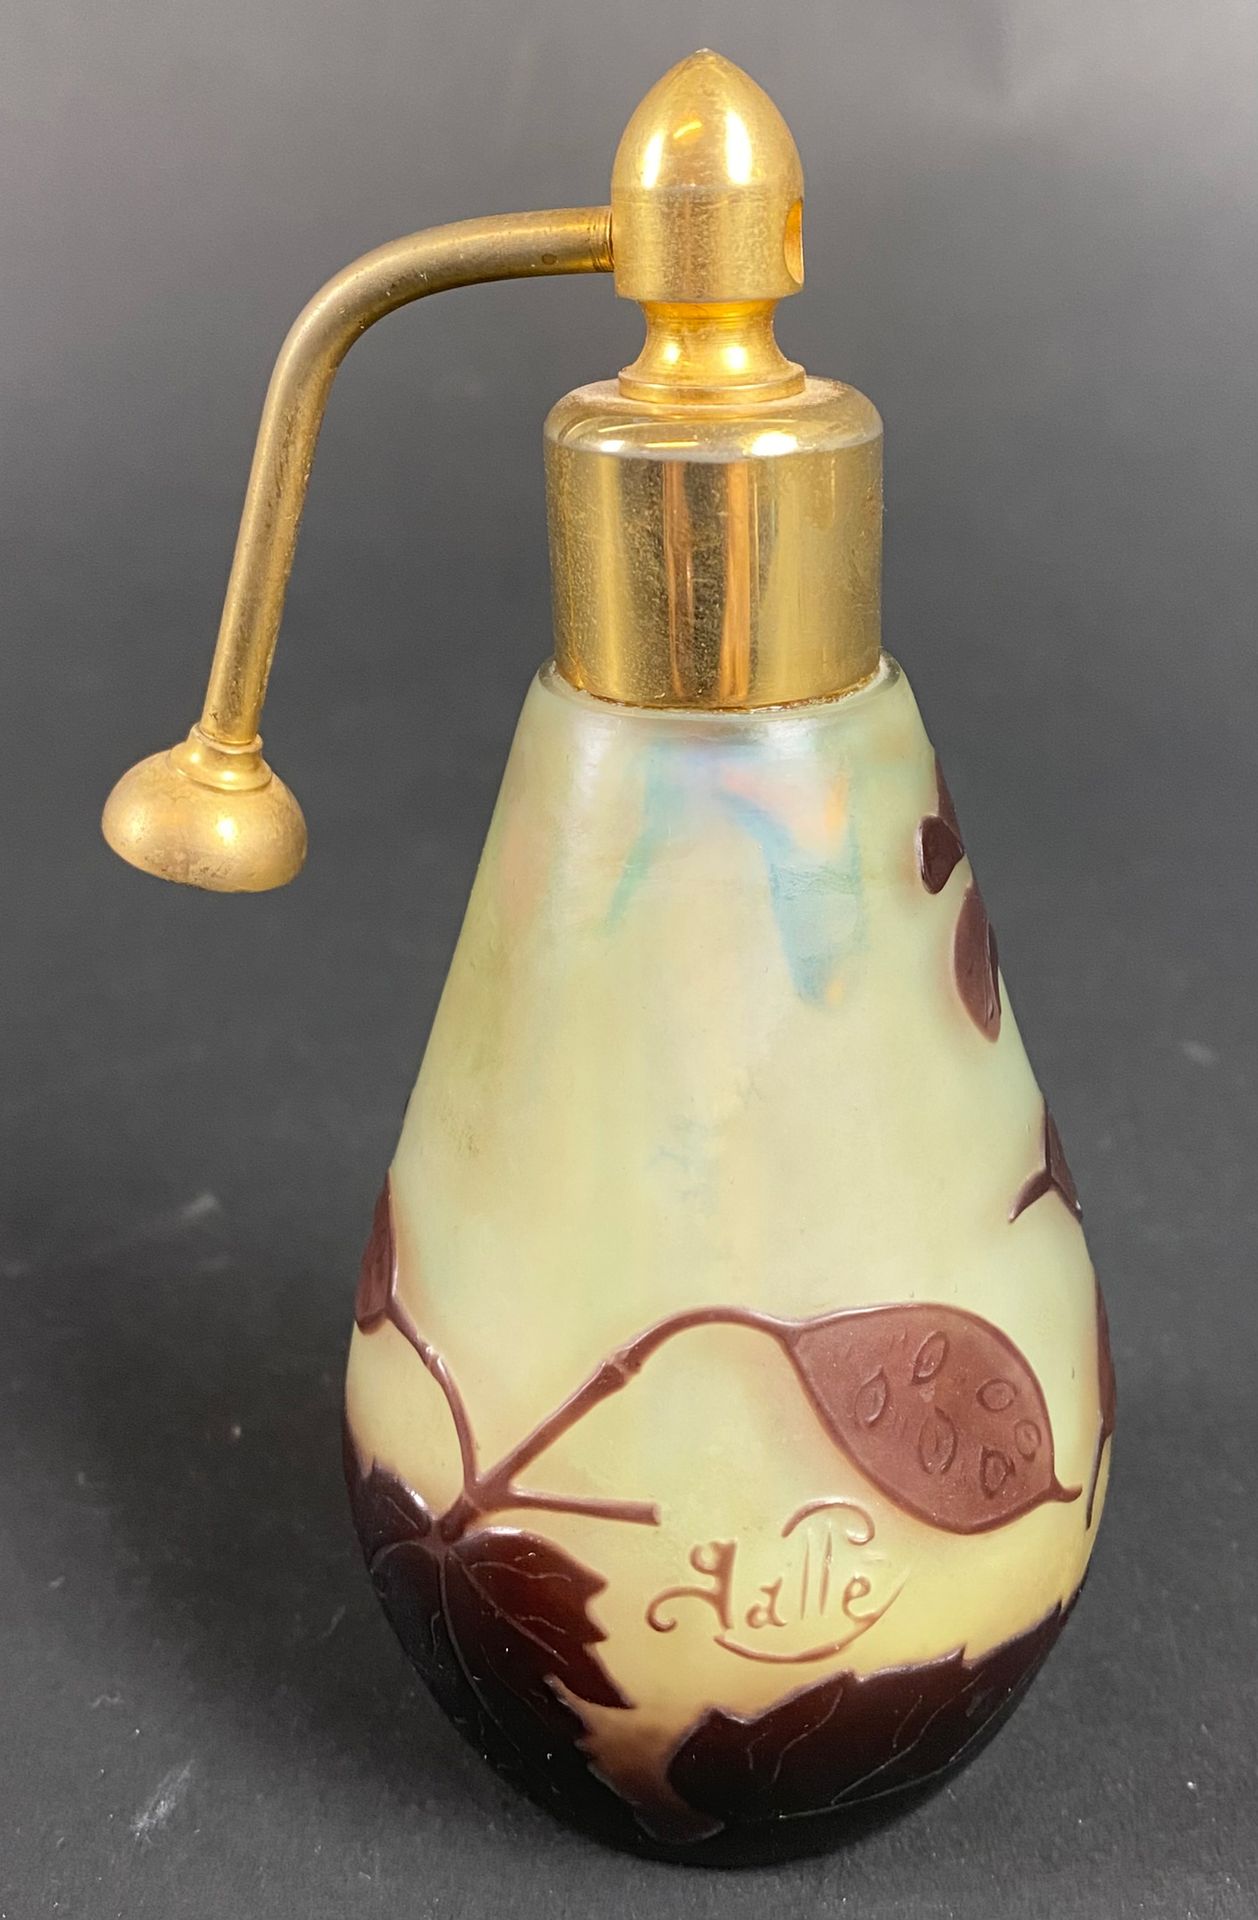 Null ETABLISSEMENT GALLE 刻有铁线莲装饰的玻璃喷雾瓶。 高：12厘米（梨子不见了）